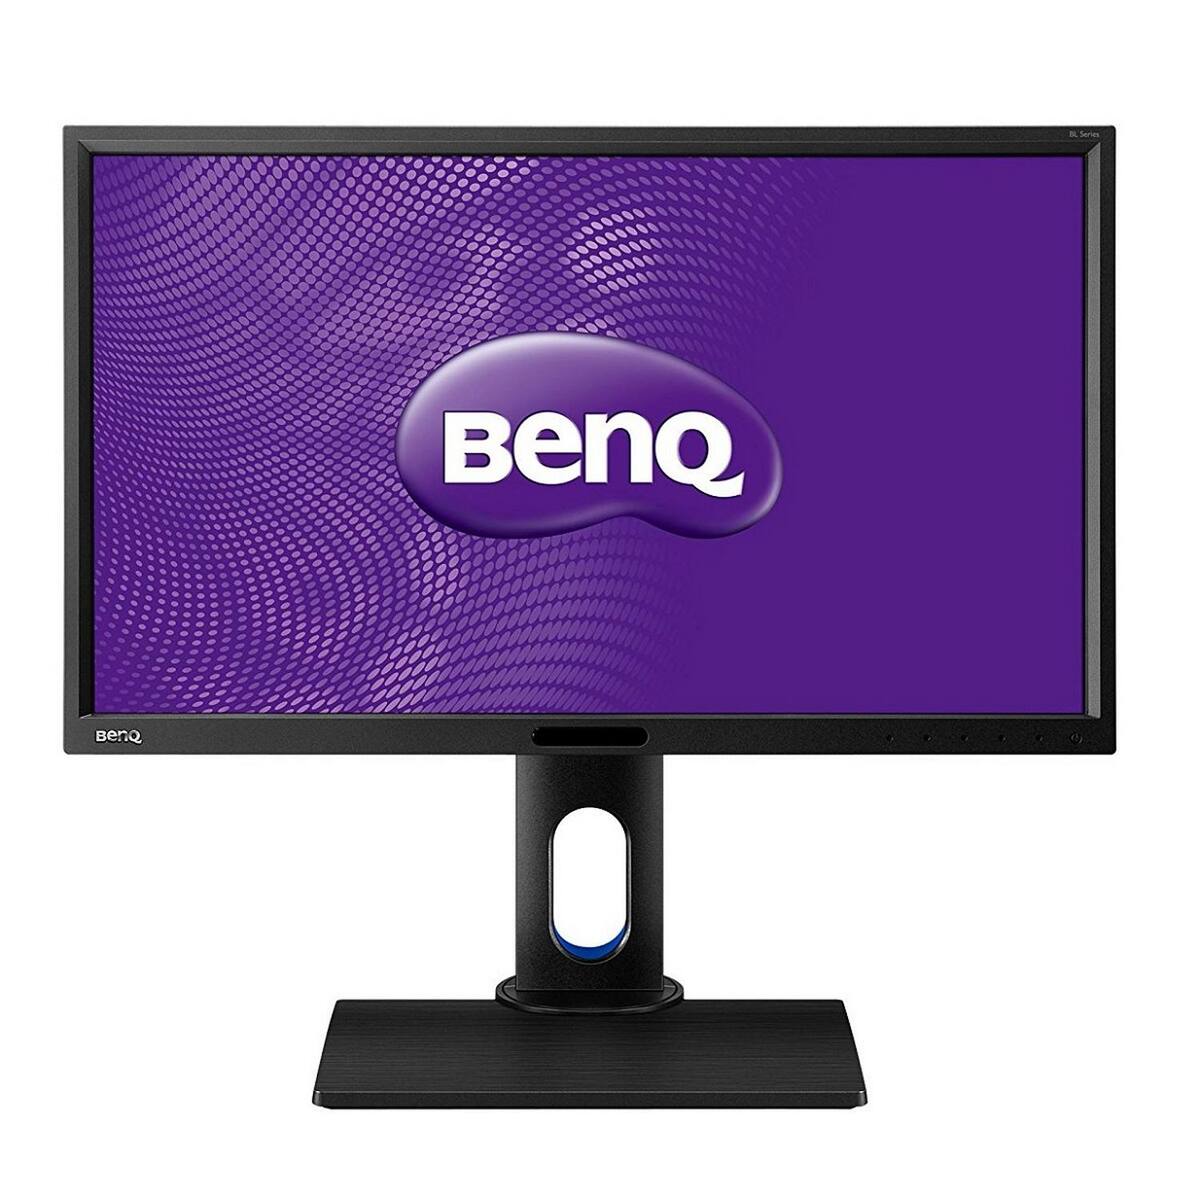 Benq QHD Monitor BL2420PT 24"